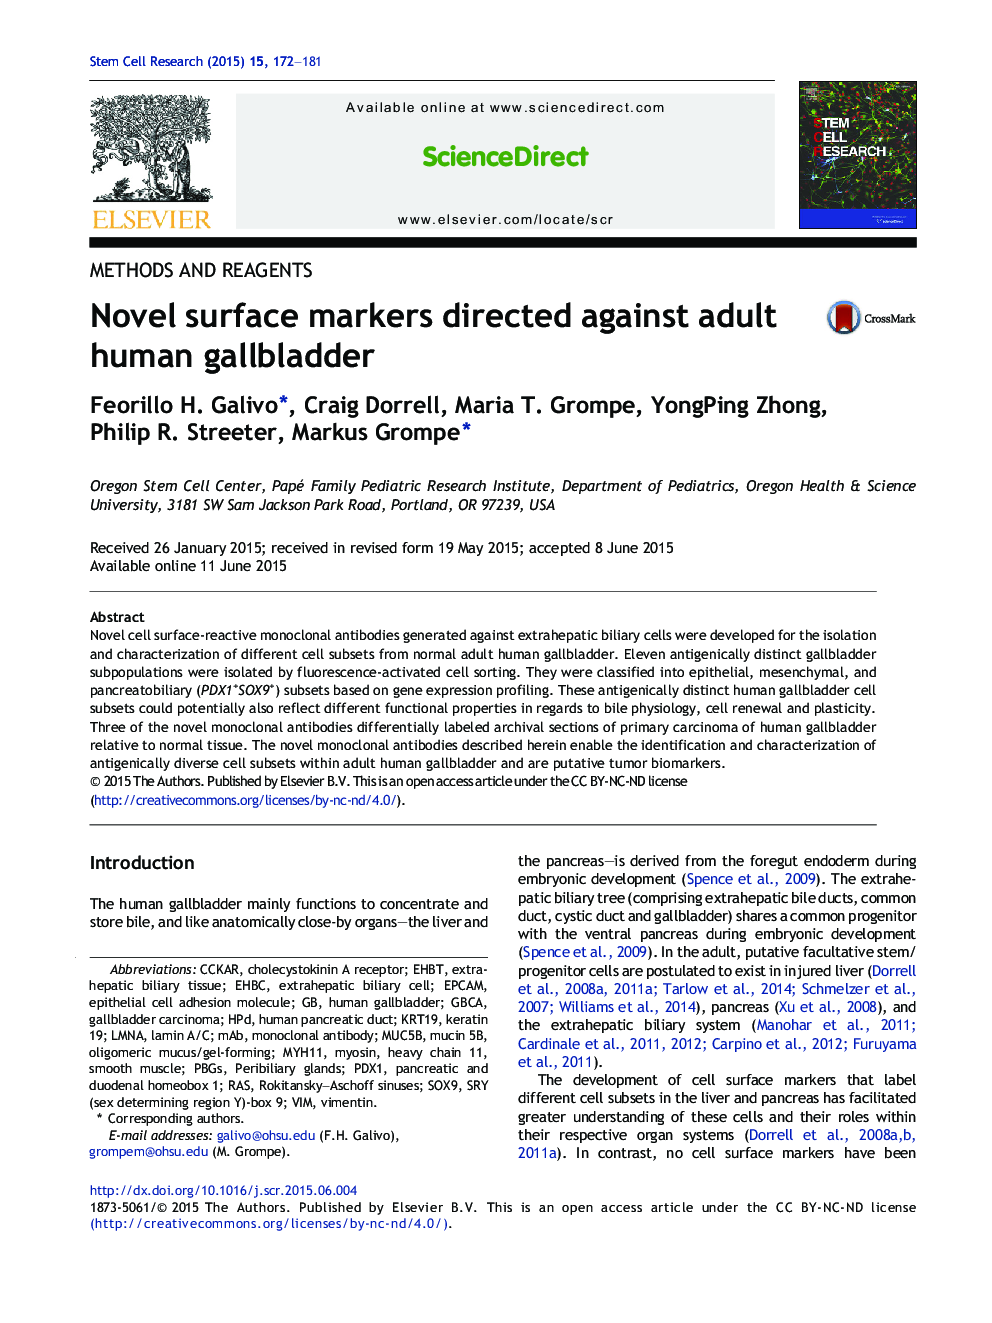 Novel surface markers directed against adult human gallbladder